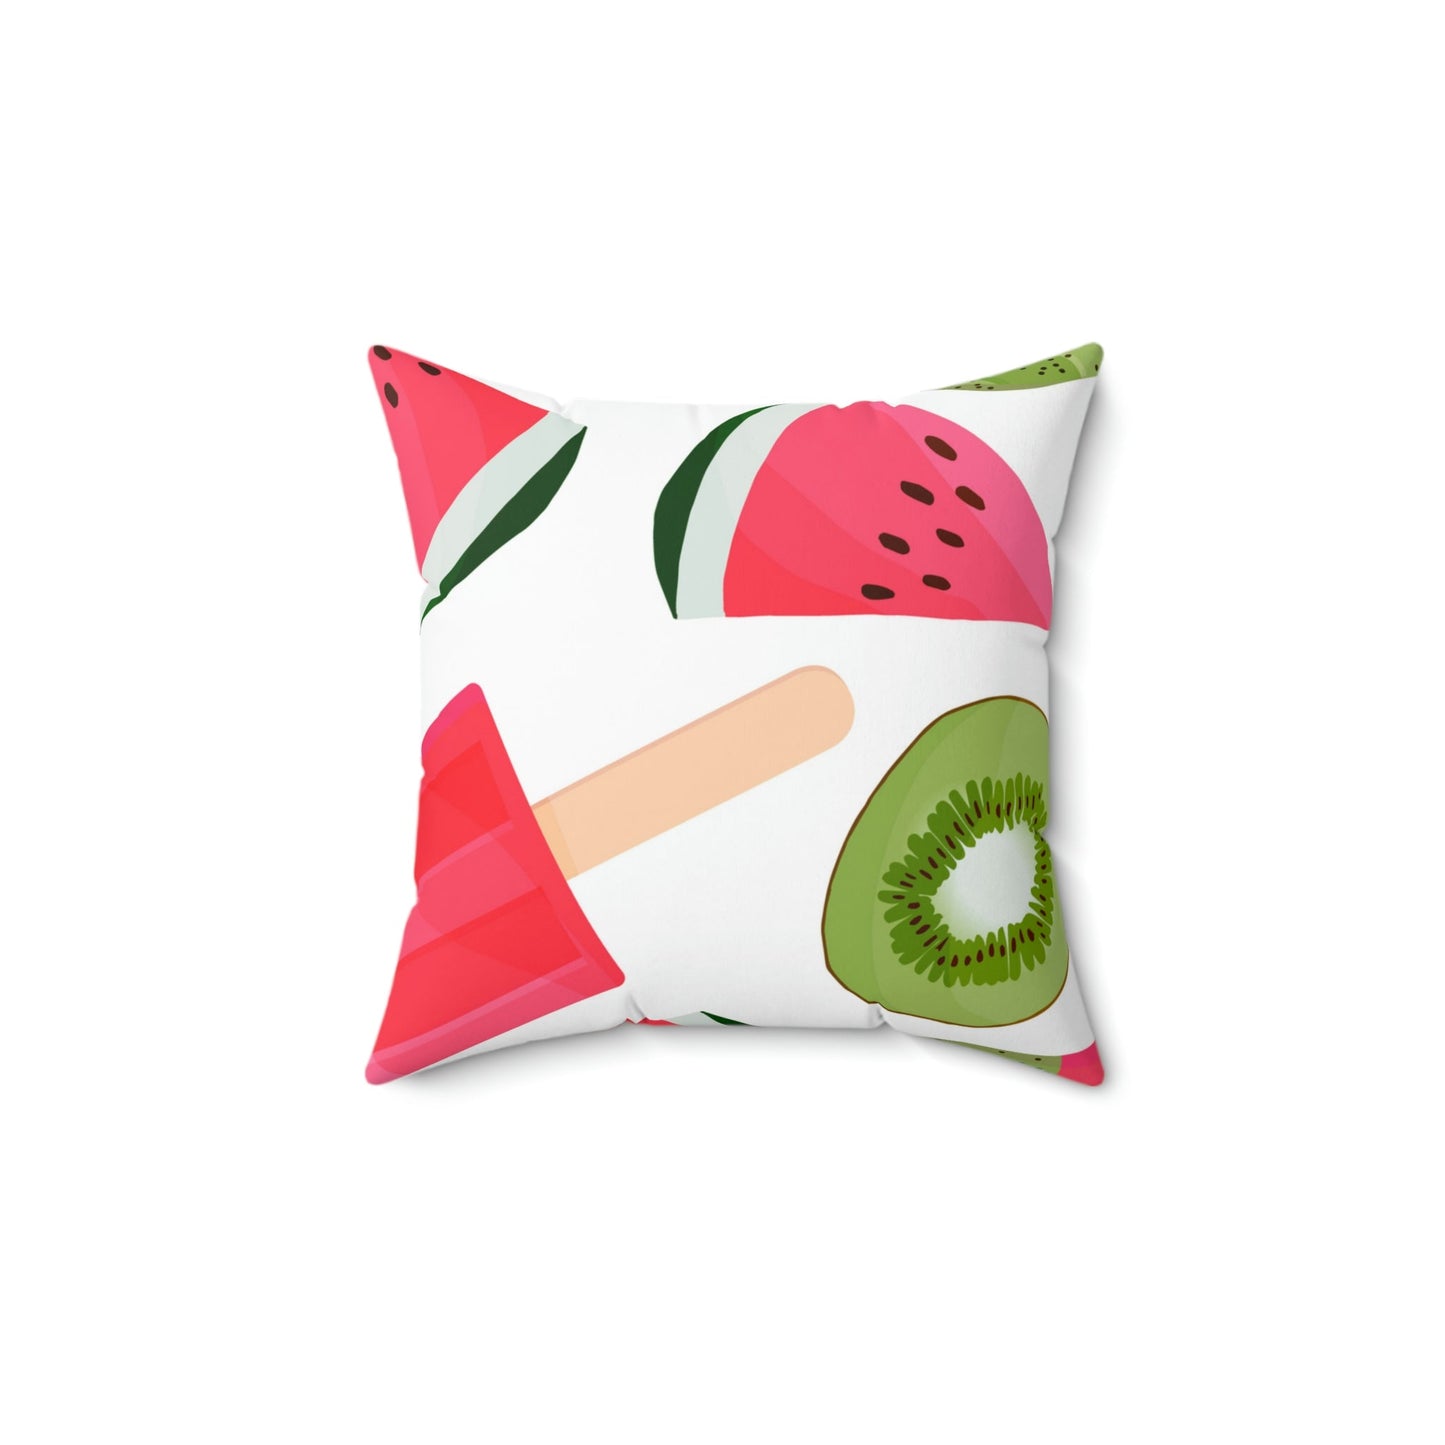 Watermelon Kiwi Square Pillow Home Decor Pink Sweetheart